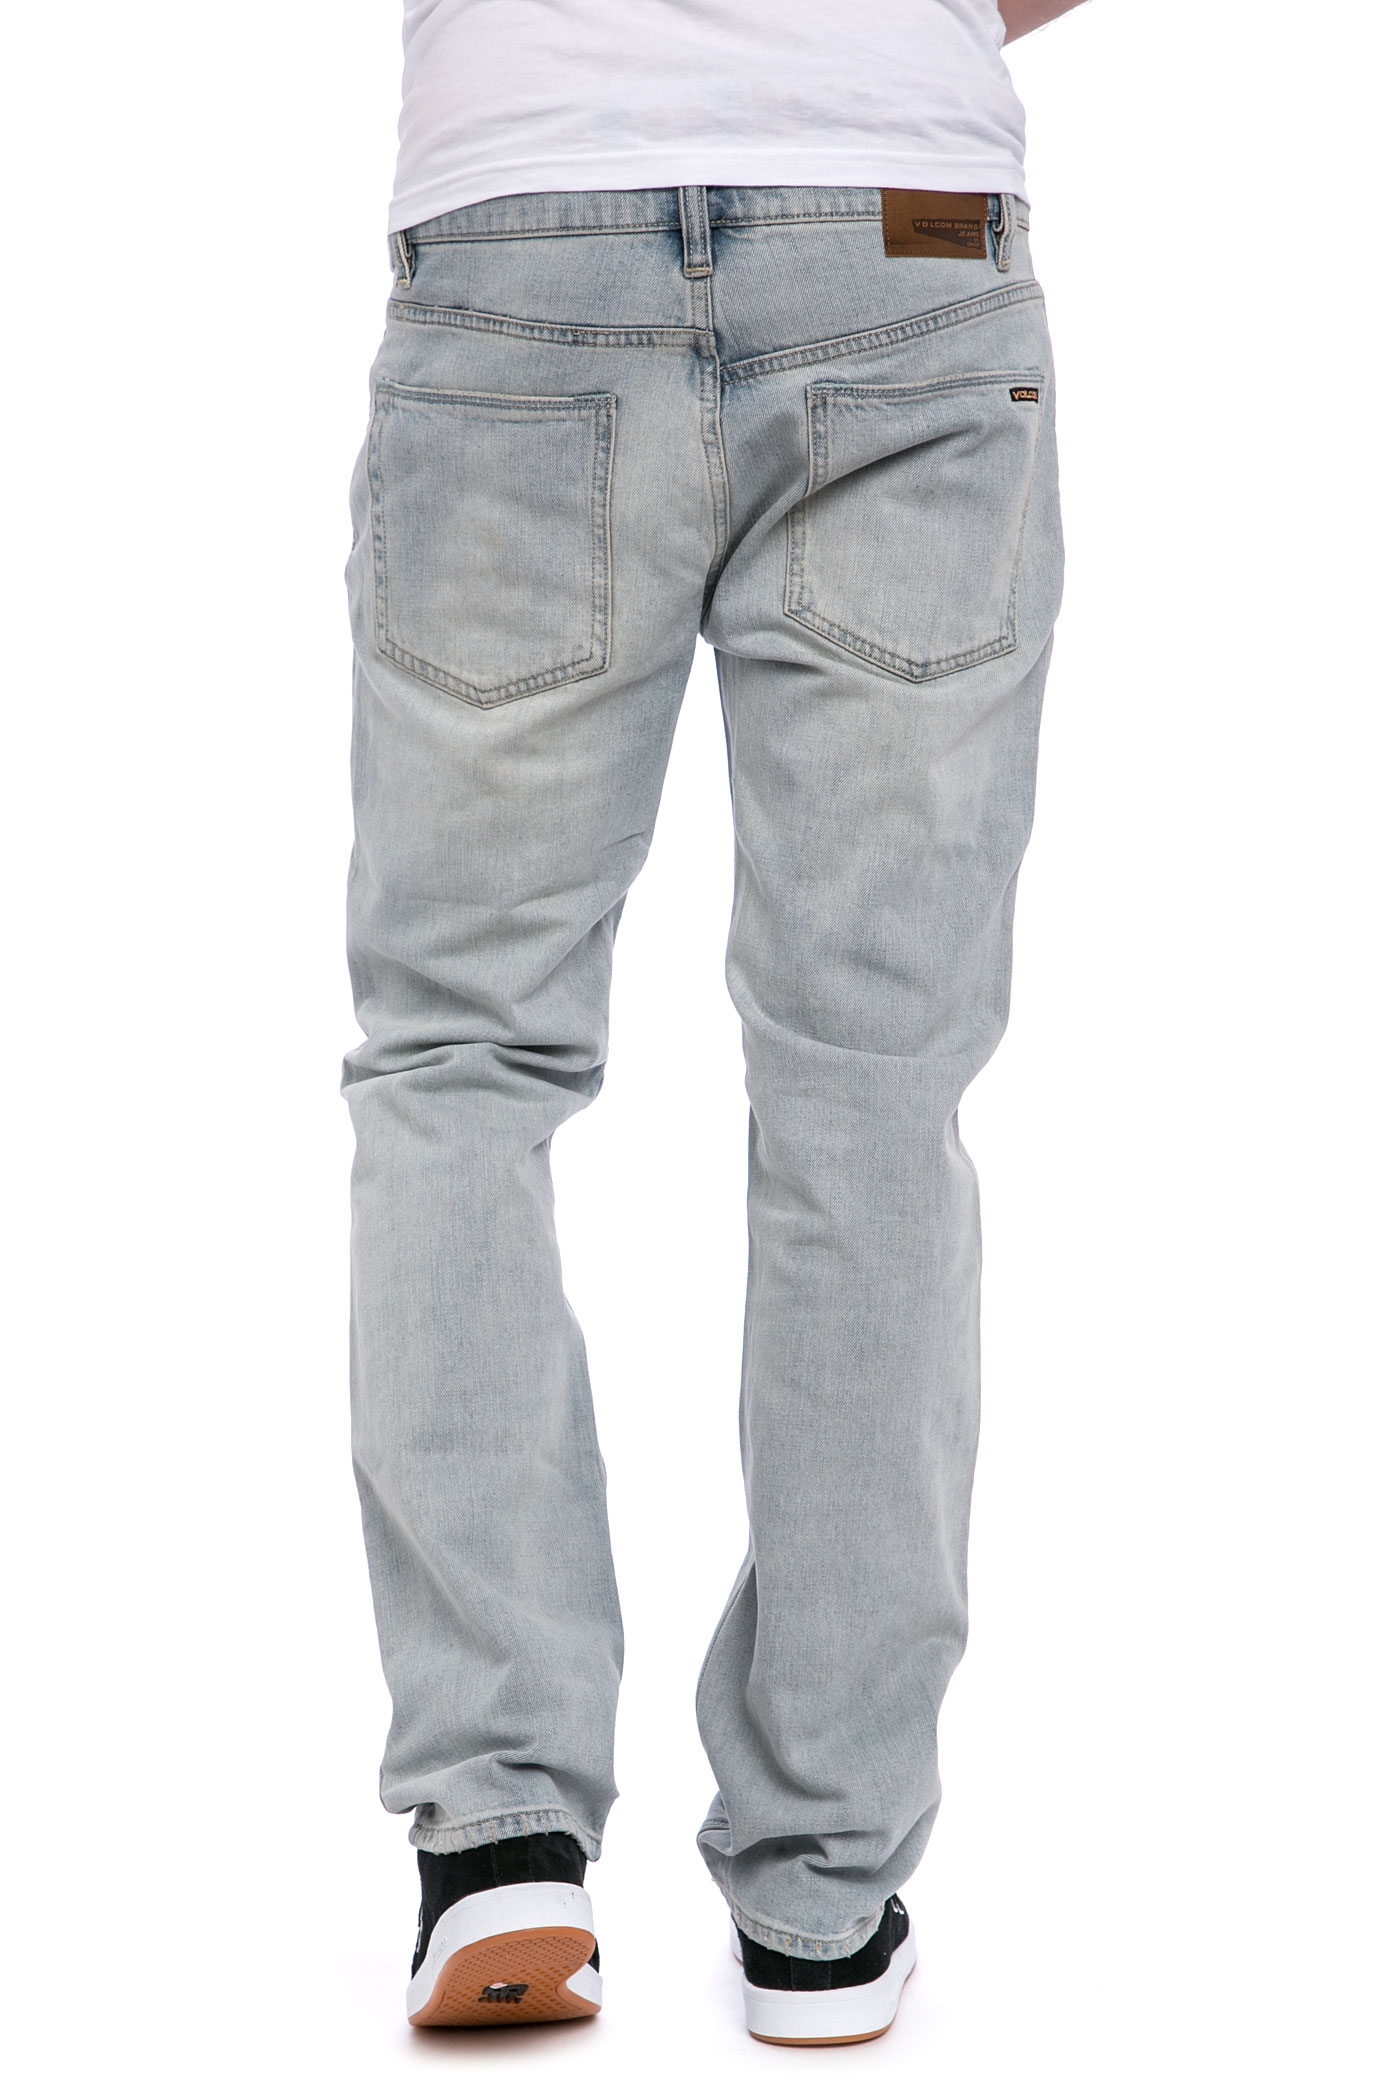 Volcom Solver Jeans (sure shot light wash) buy at skatedeluxe